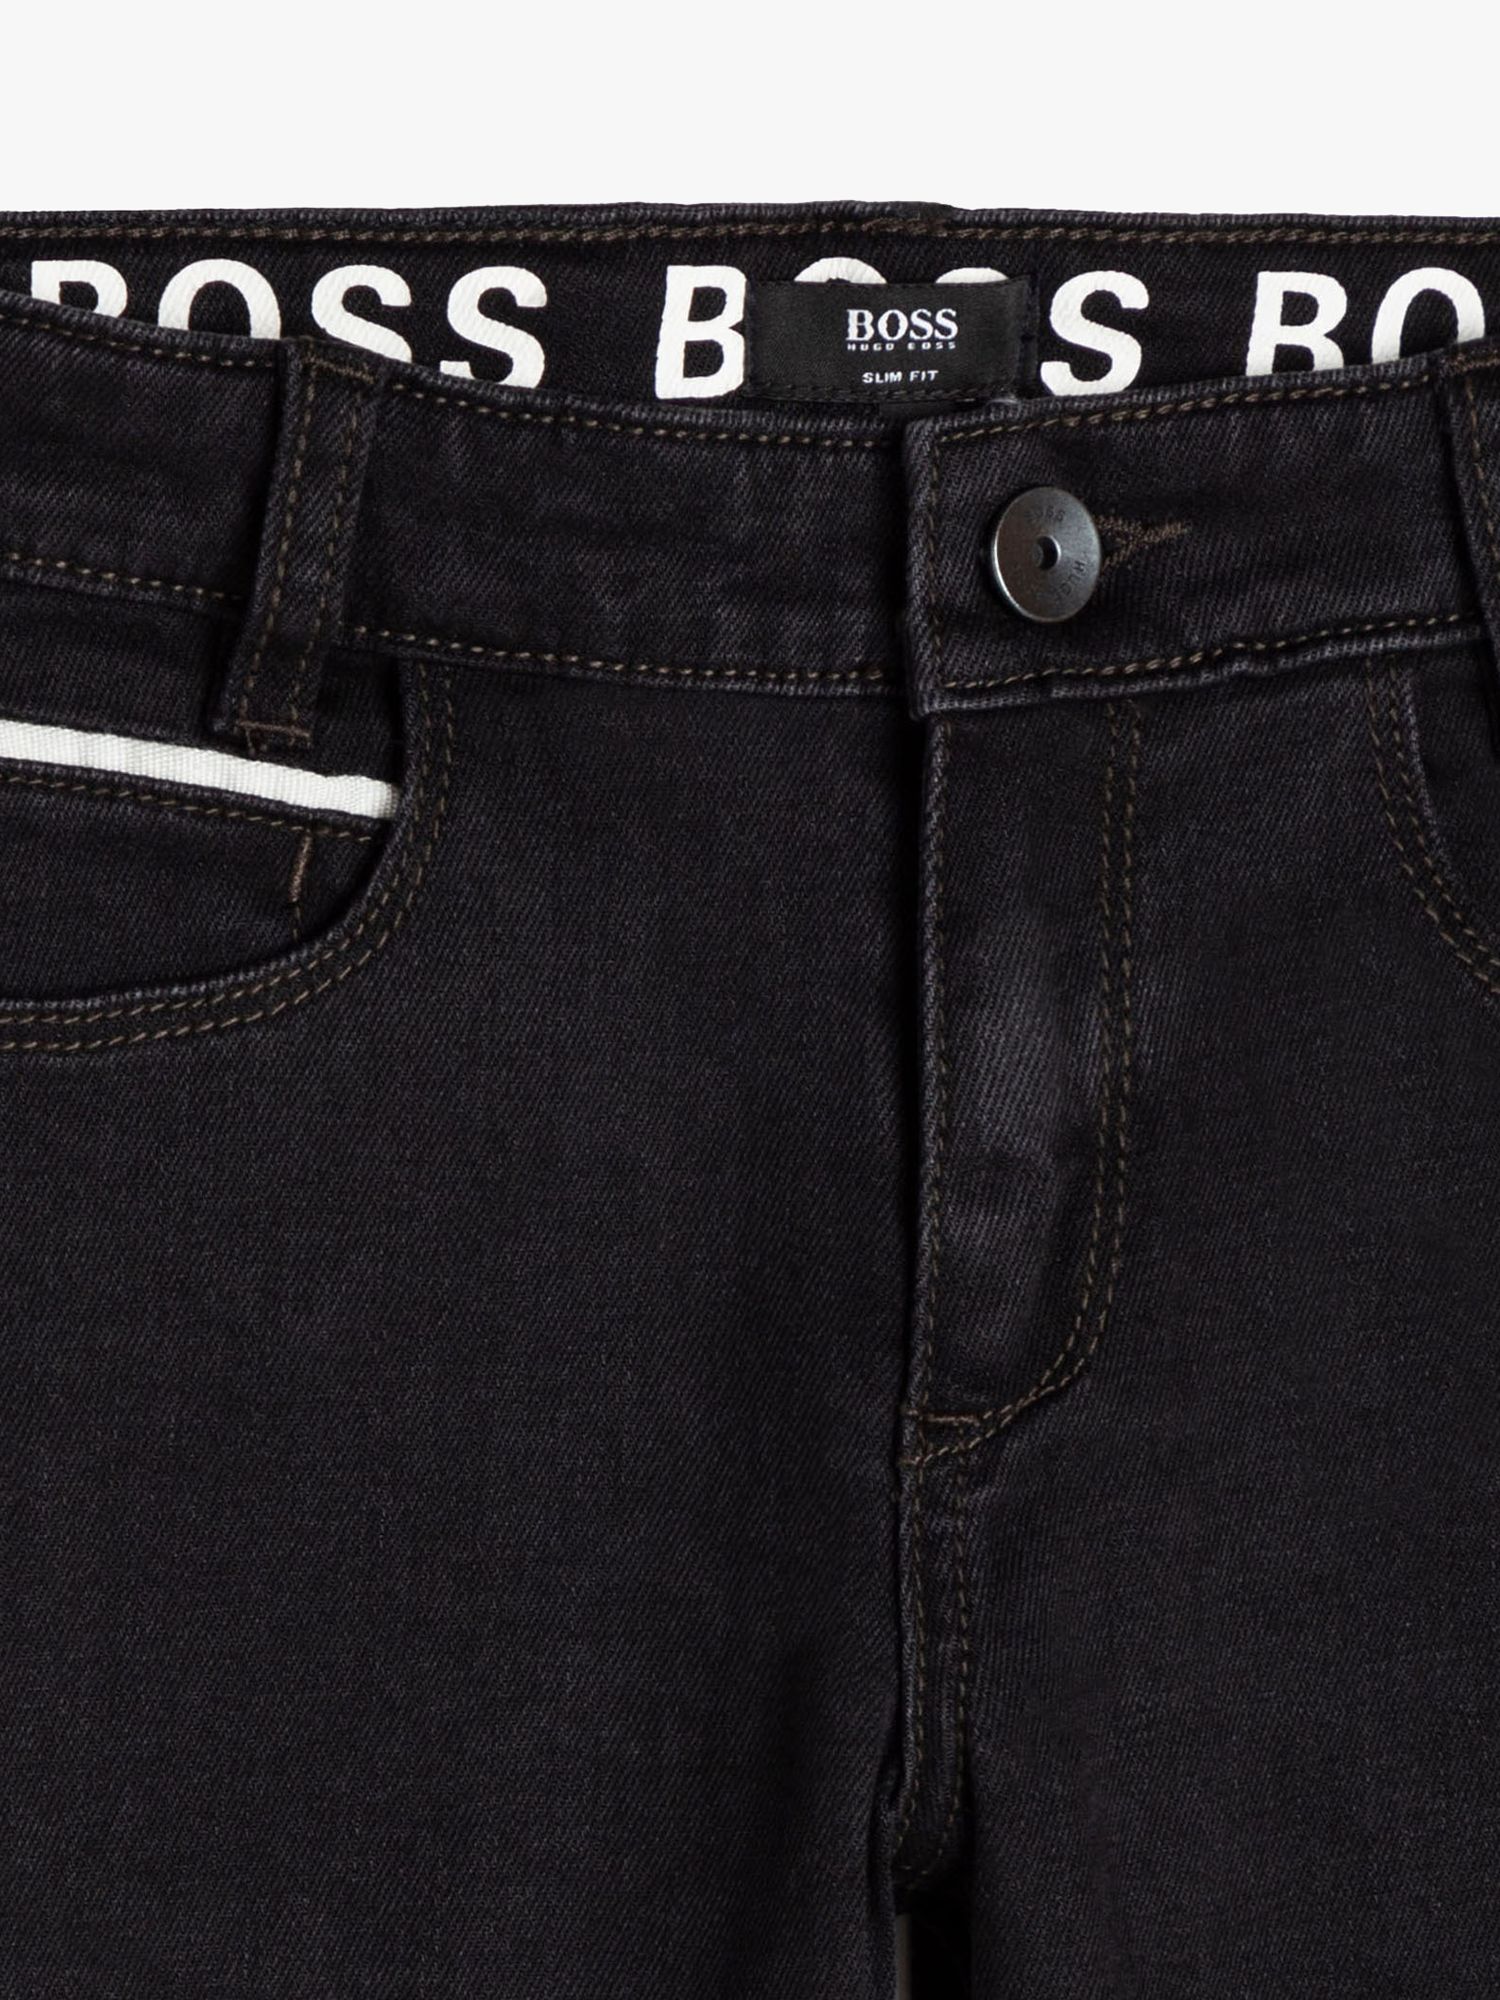 HUGO BOSS Kids' Slim Fit Jeans, Denim Black, 6-9 months